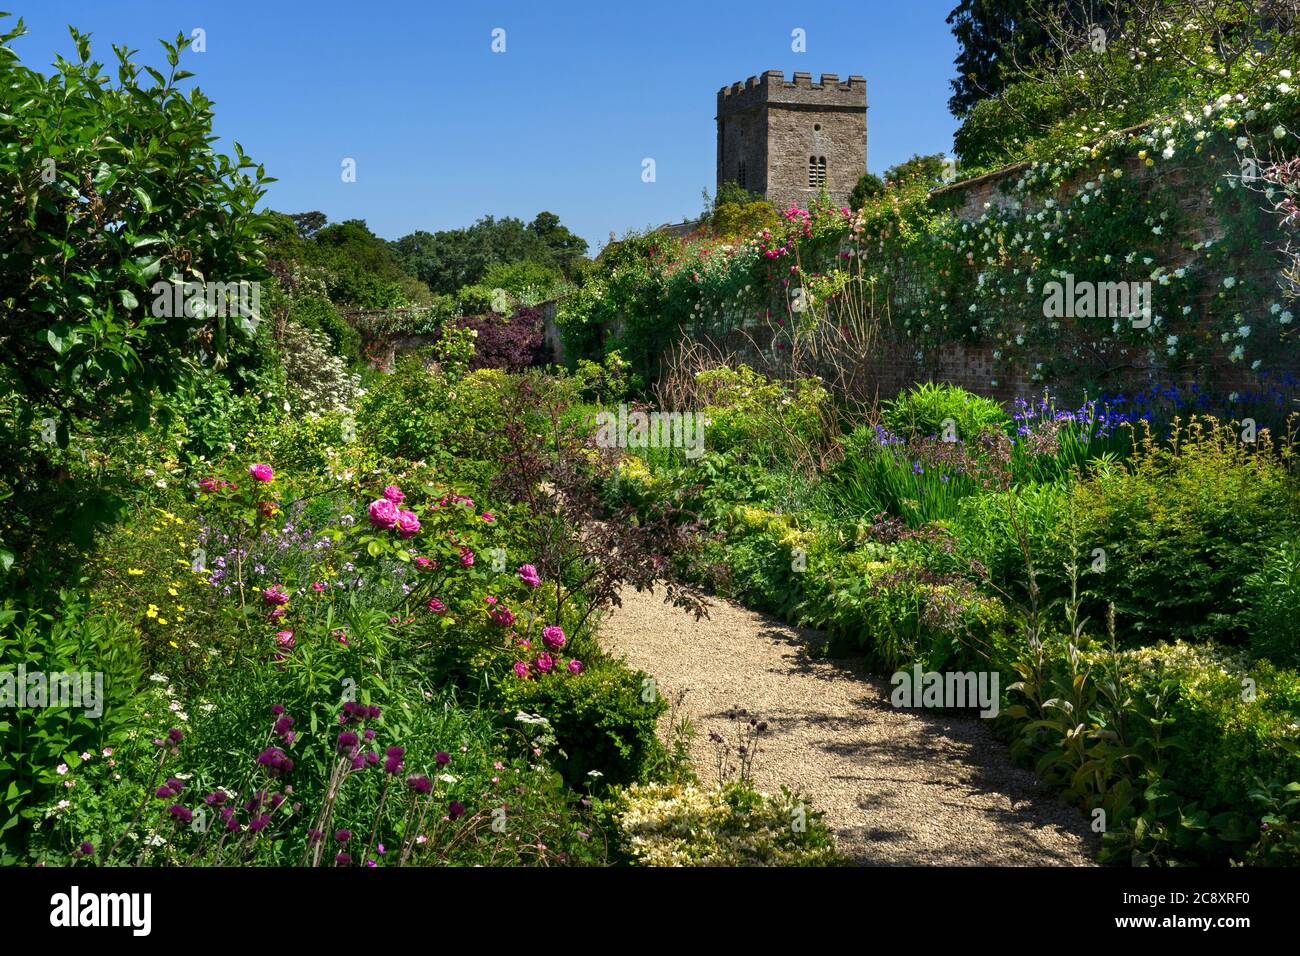 Rousham House and Gardens, Oxfordshire, England Stockfoto